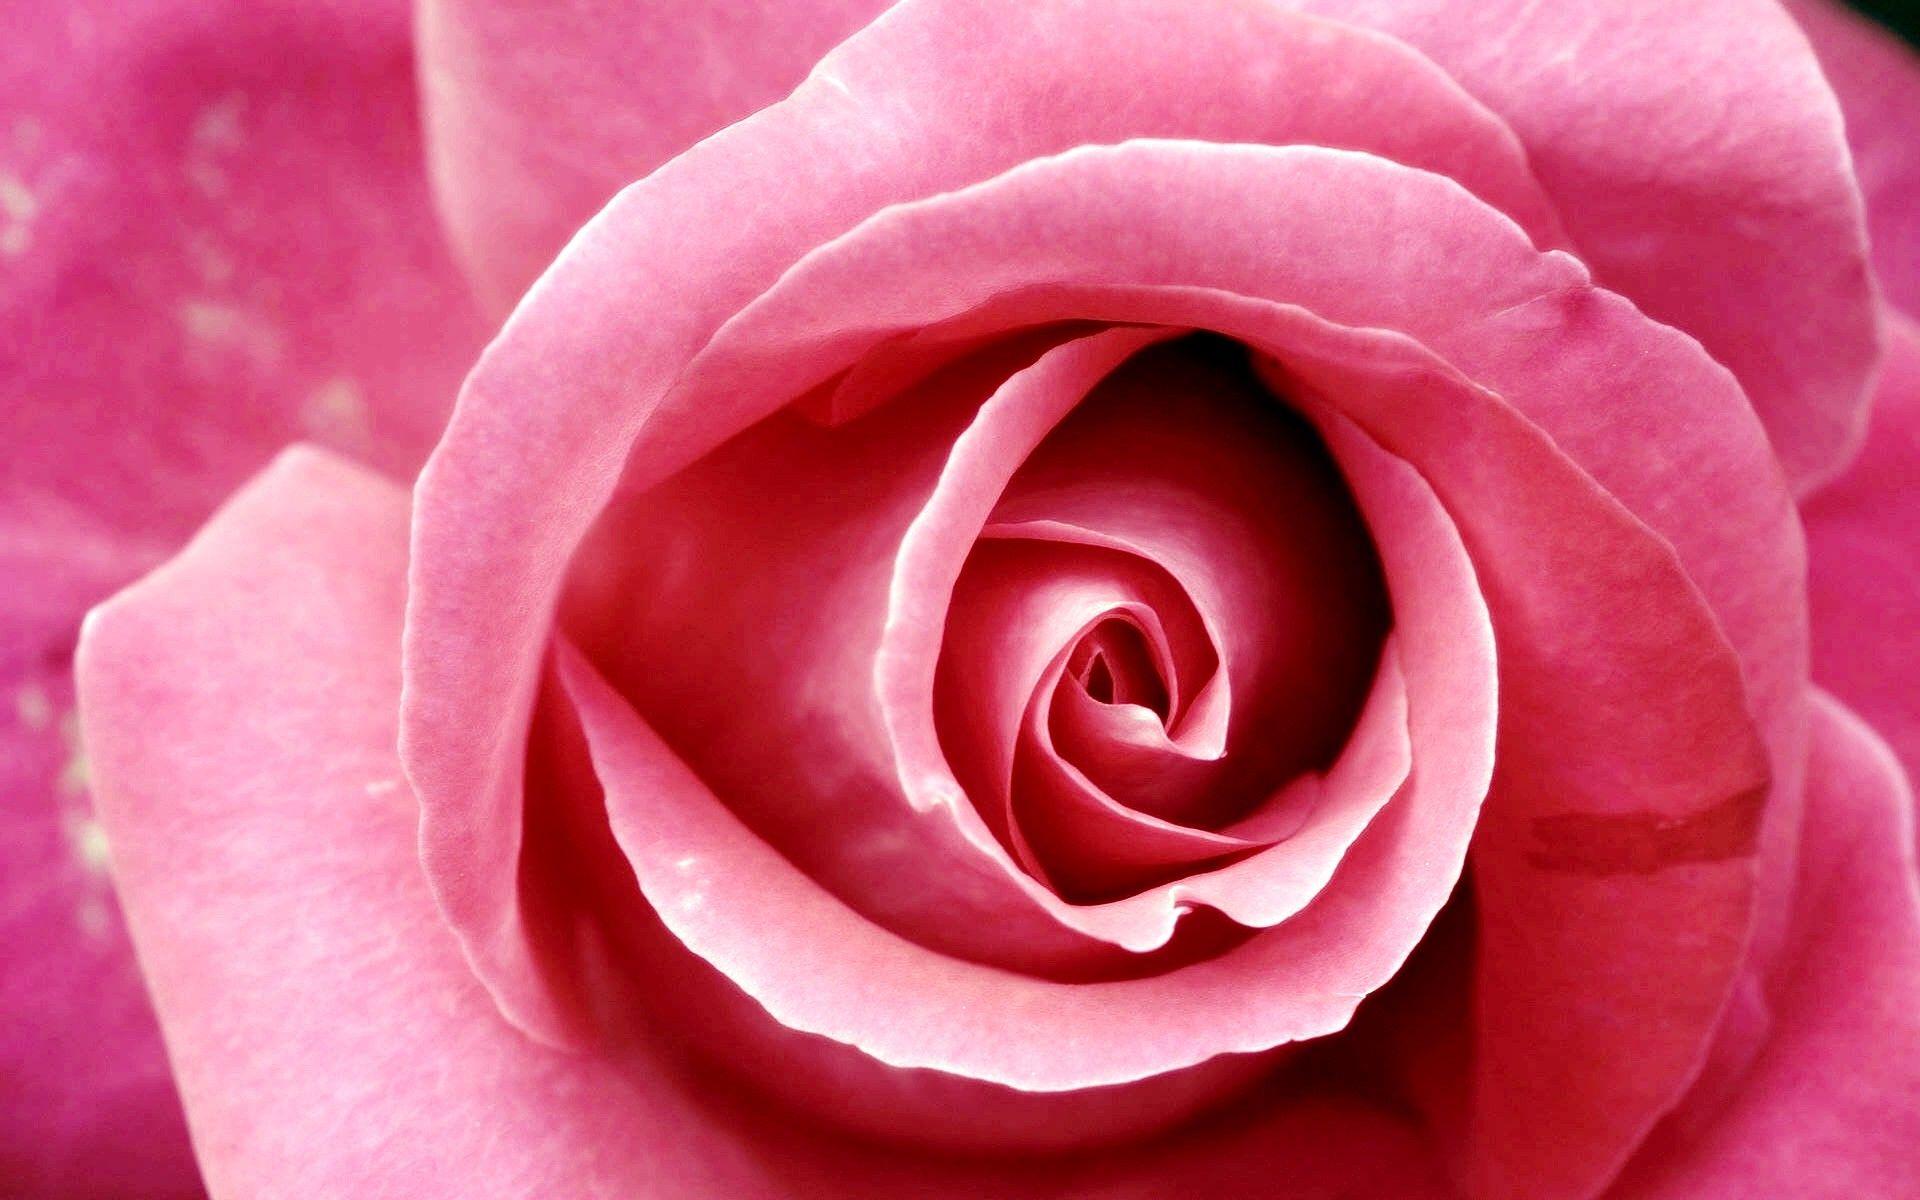 Cute Pink Rose Flower HD Wallpaper Image Desktop Of